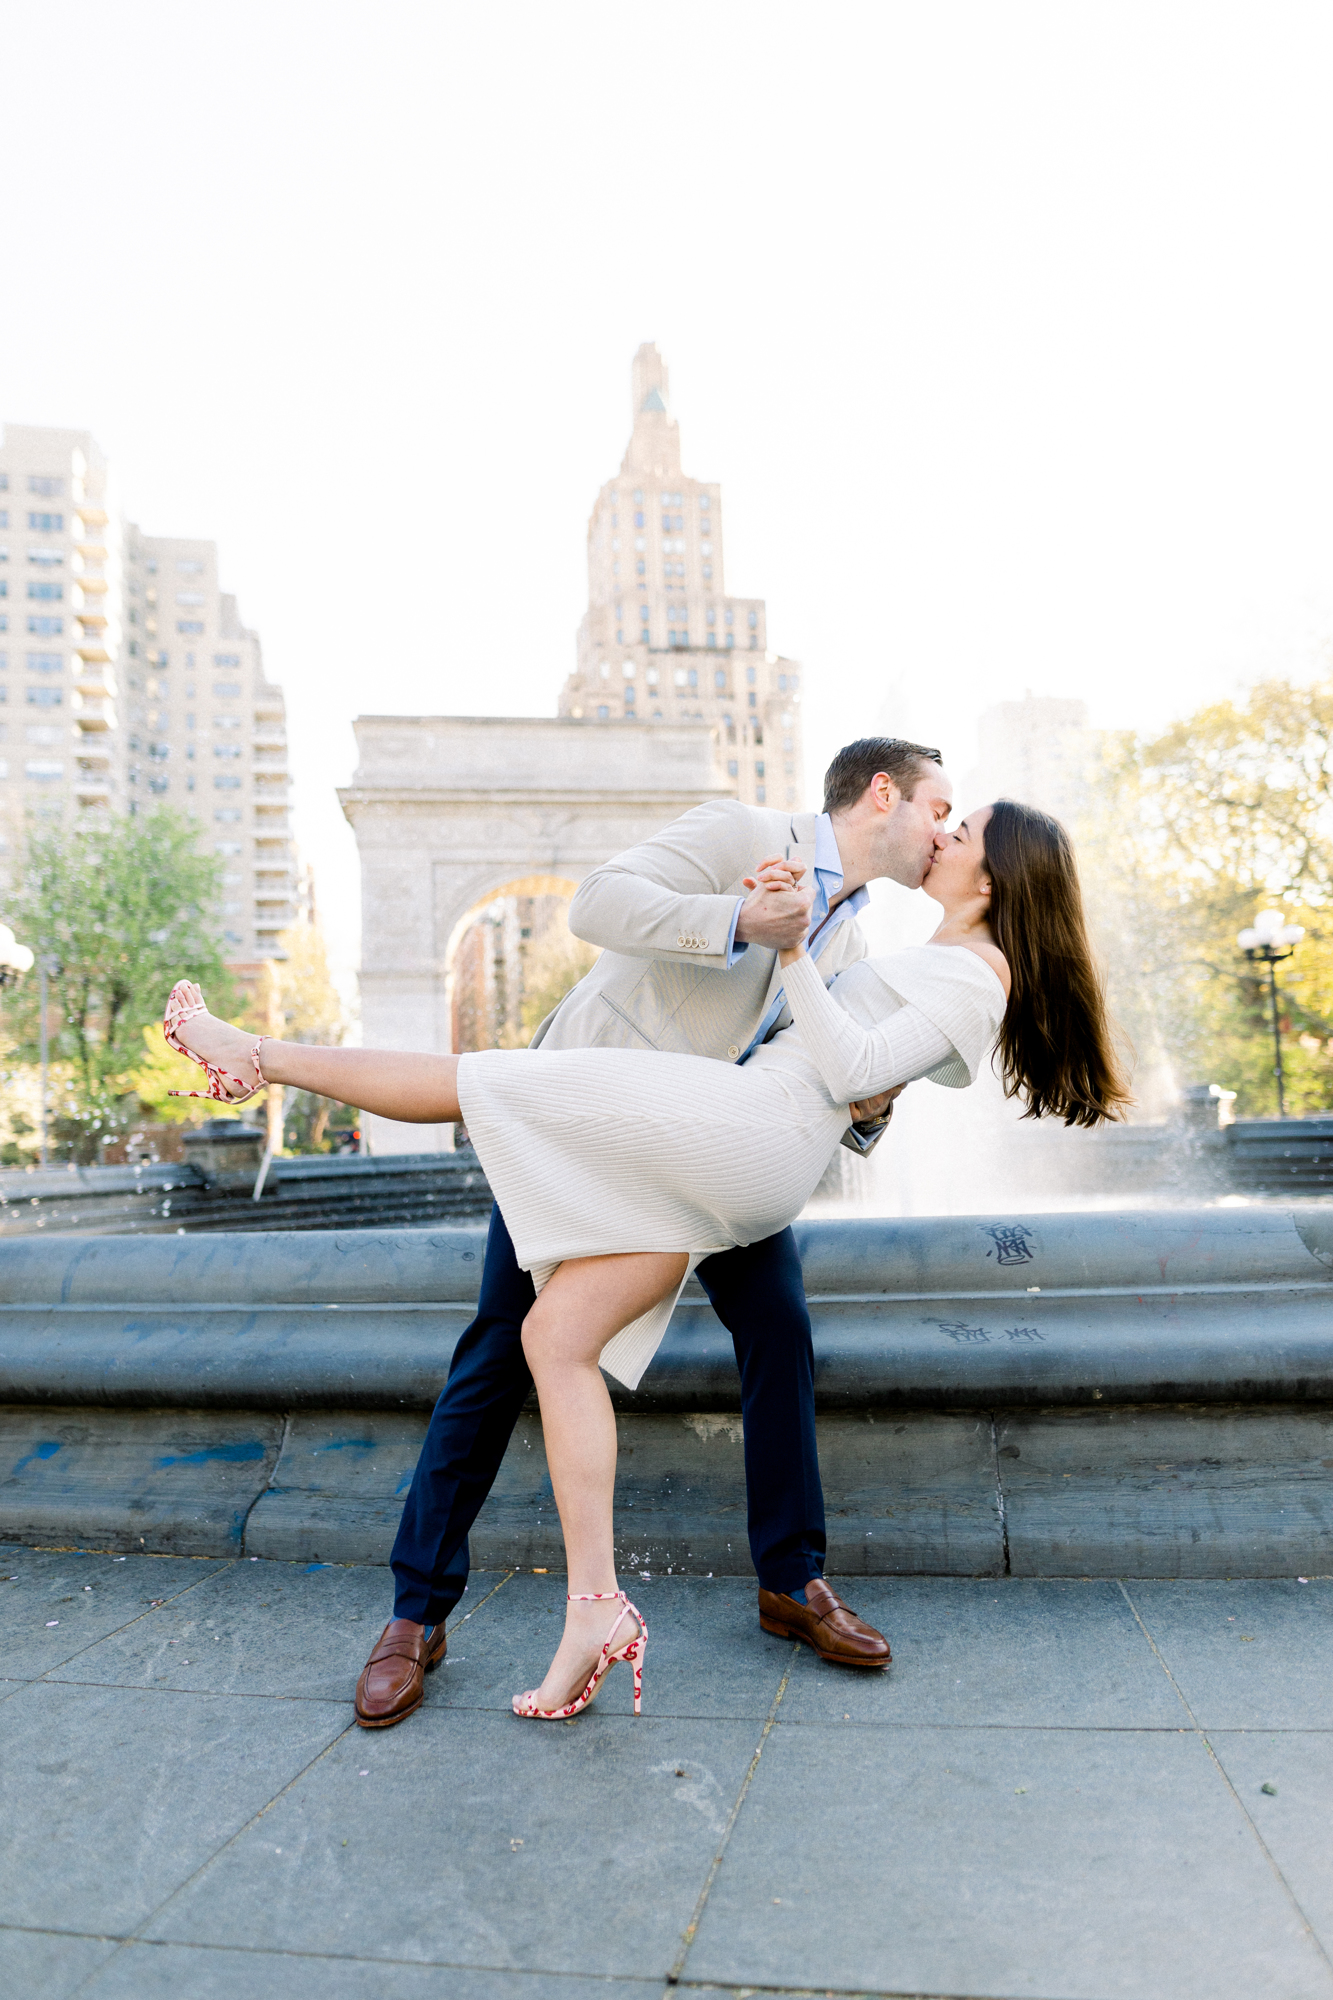 Stunning Spring Engagement Photos in Washington Square Park NYC